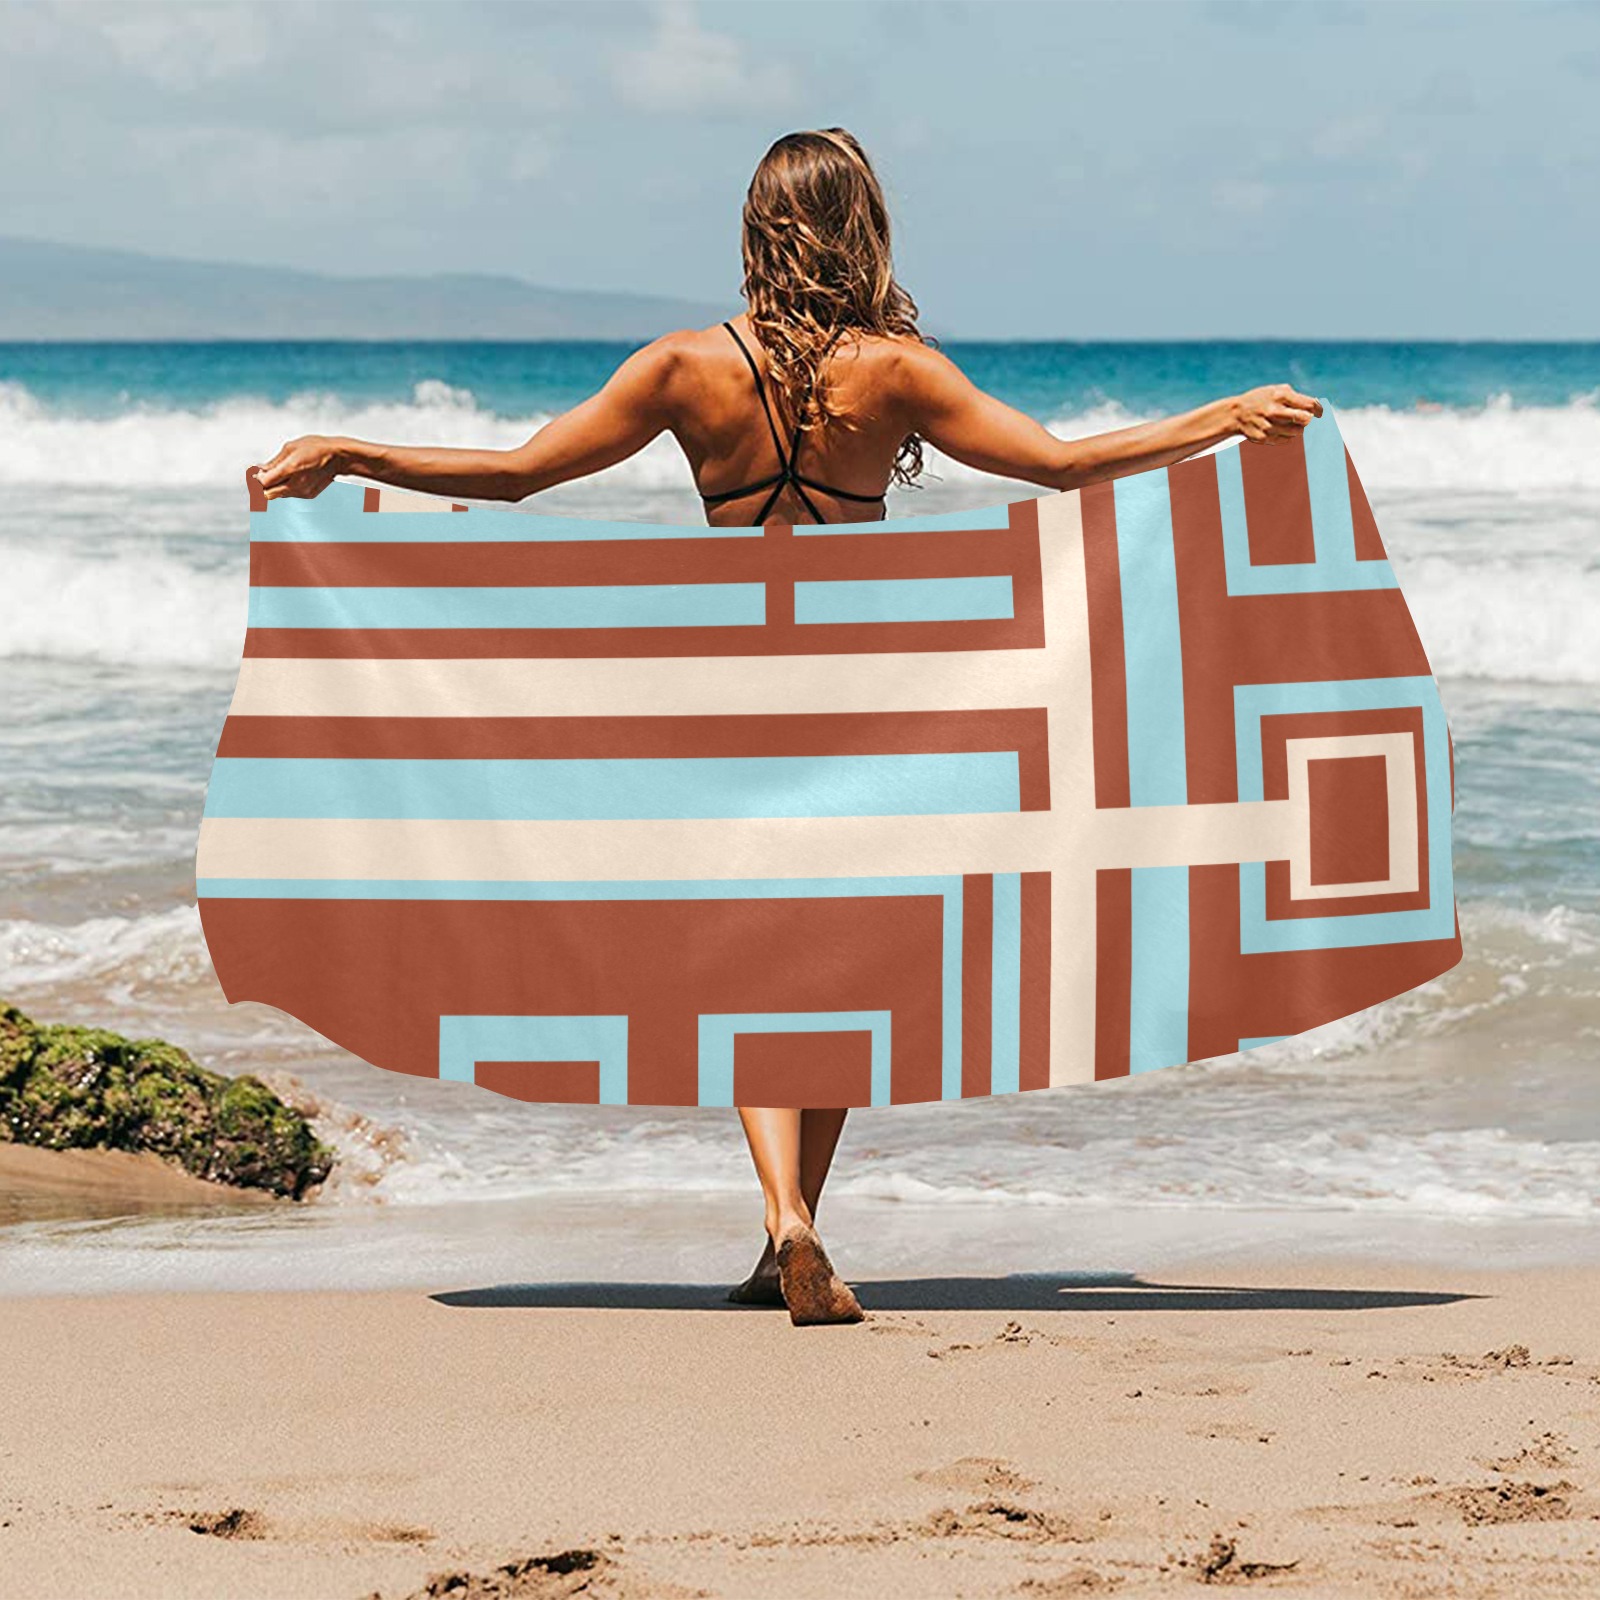 Model 1 Beach Towel 32"x 71"